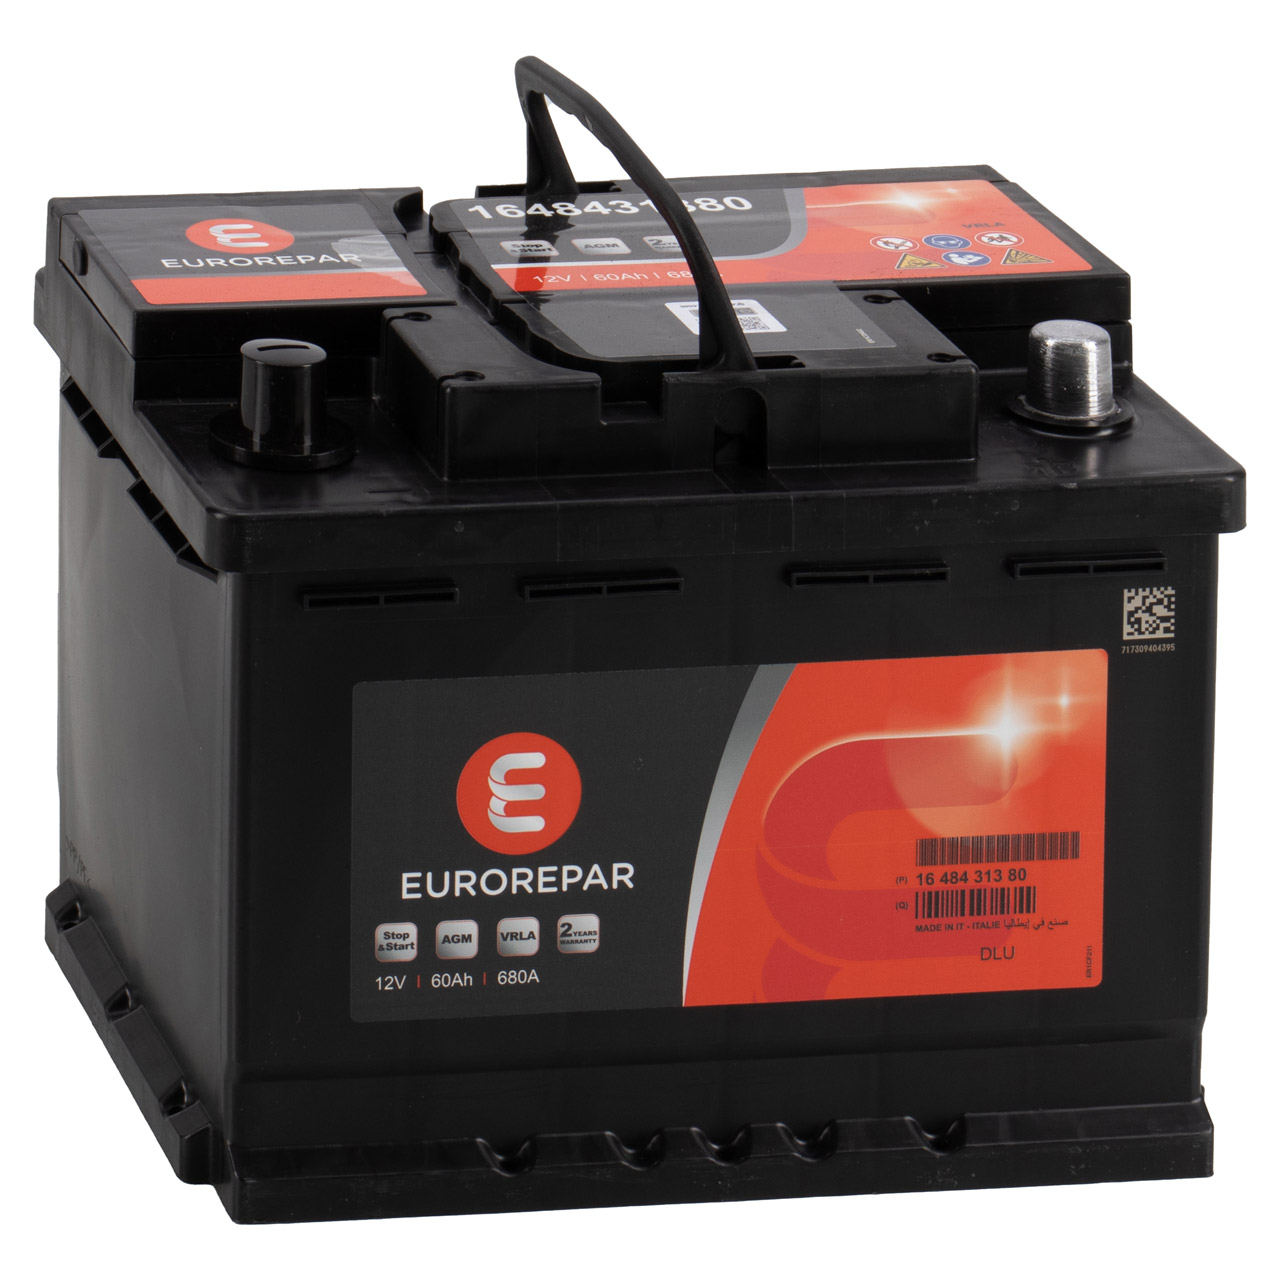 EUROREPAR AGM Batterie Autobatterie Starterbatterie 12V 60Ah 680A/EN  1648431380 